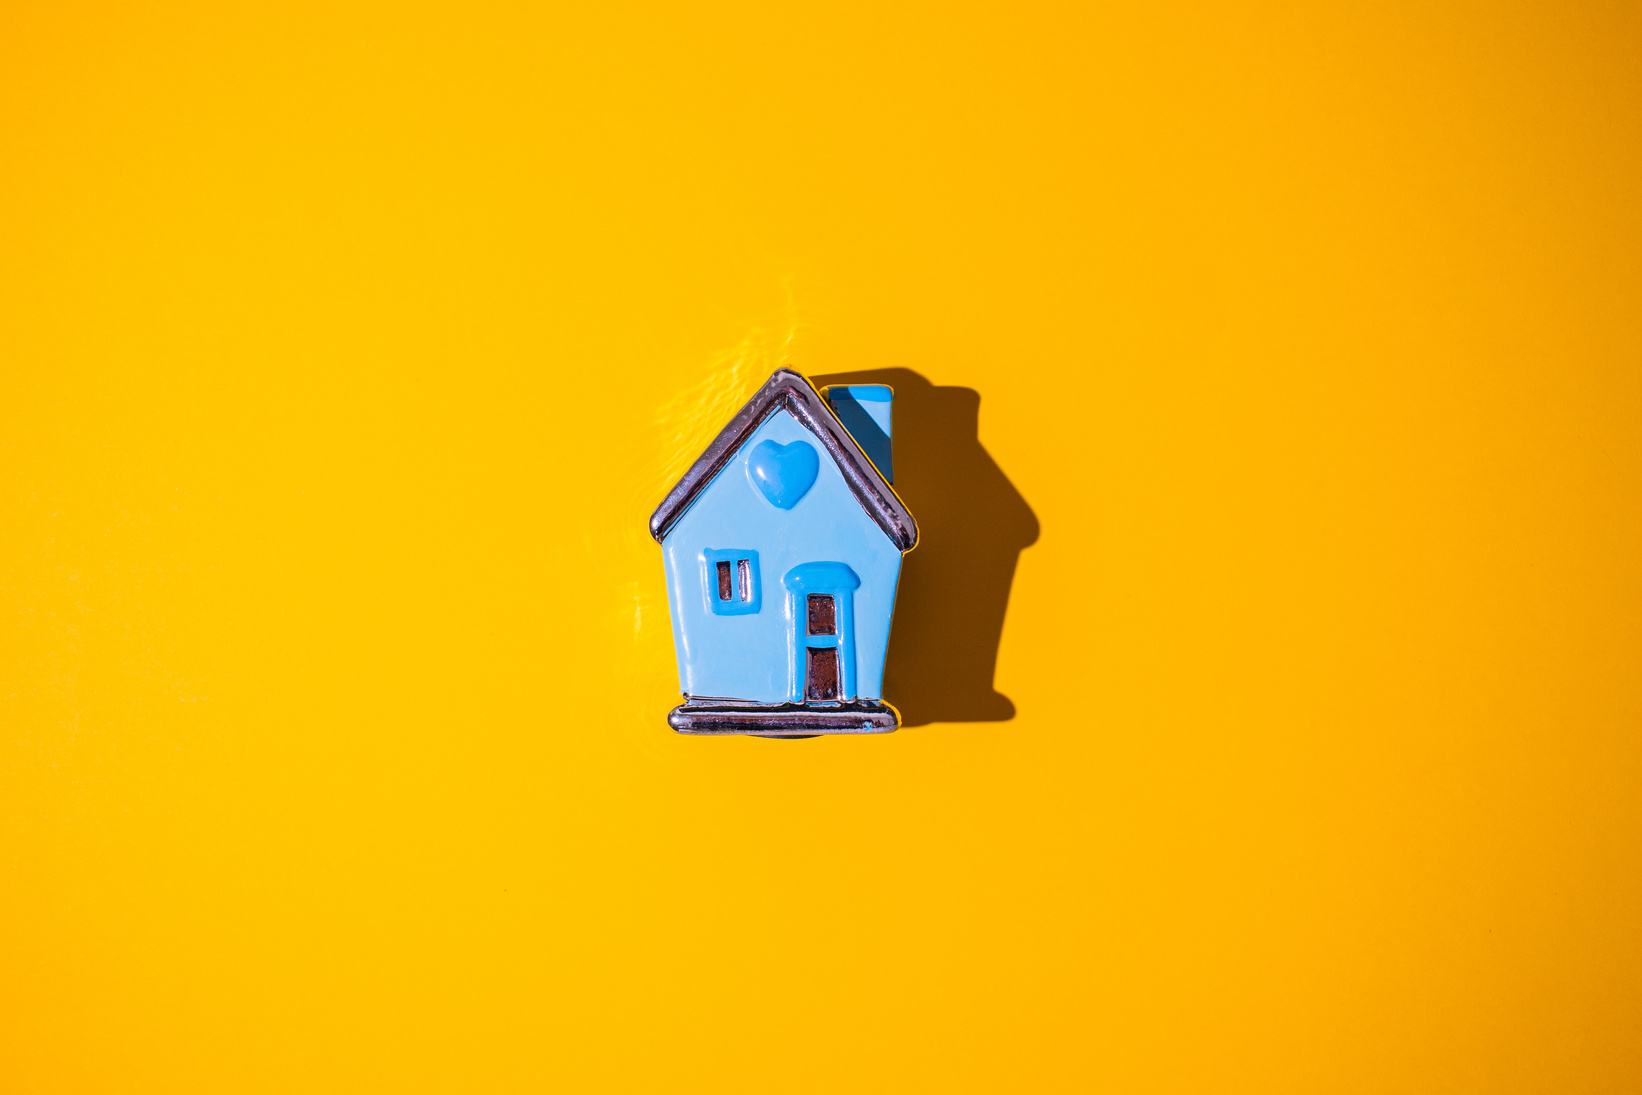 Tiny House Model on Yellow Background